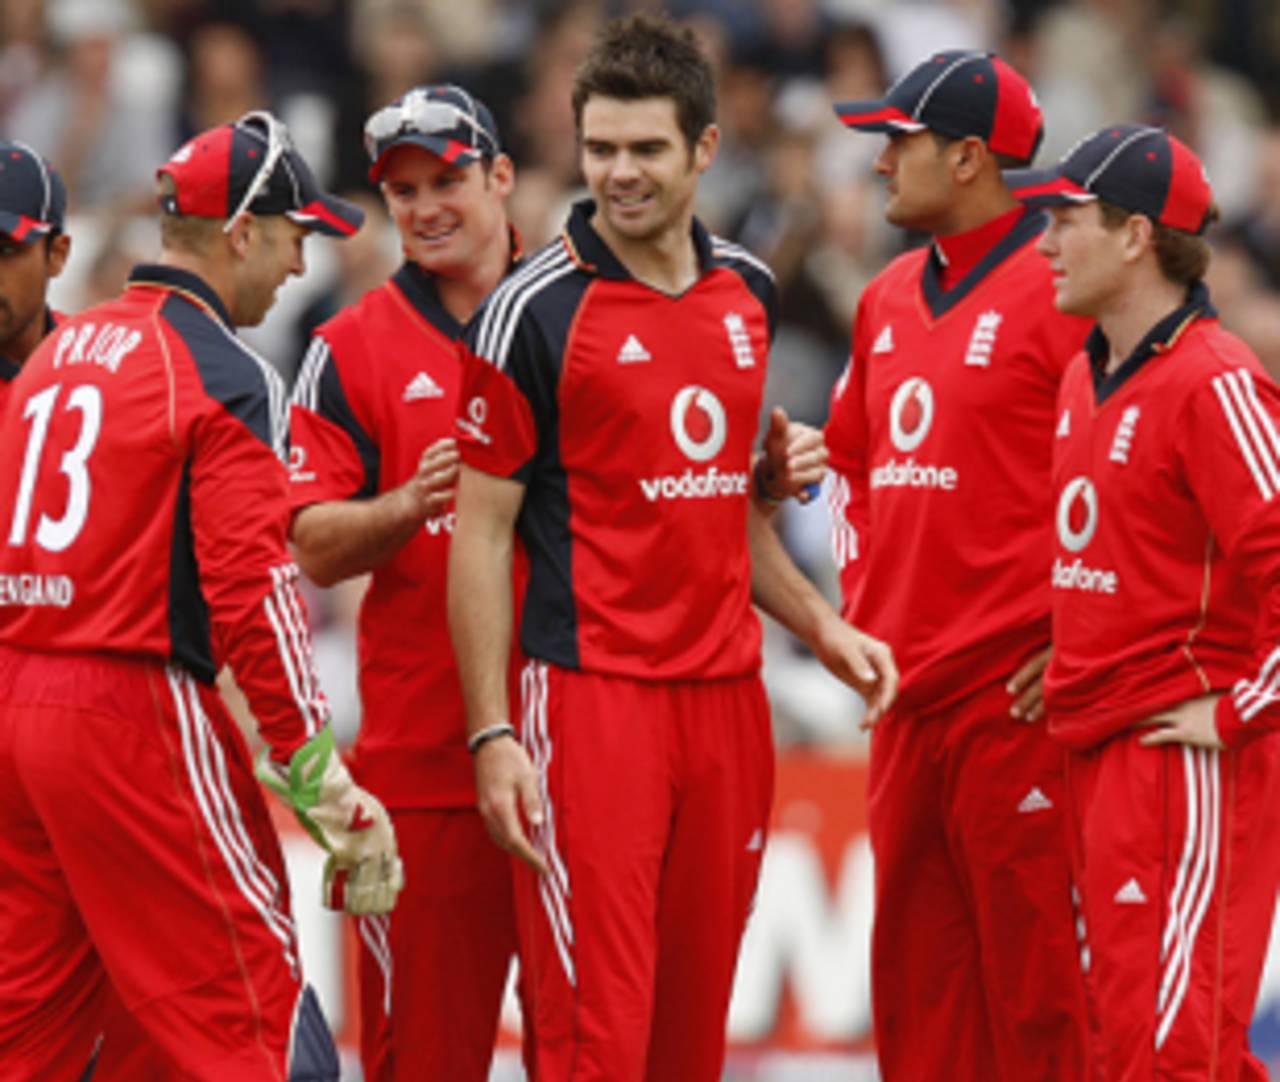 James Anderson gets the congratulations after removing Shane Watson, England v Australia, 6th ODI, Trent Bridge, September 17, 2009